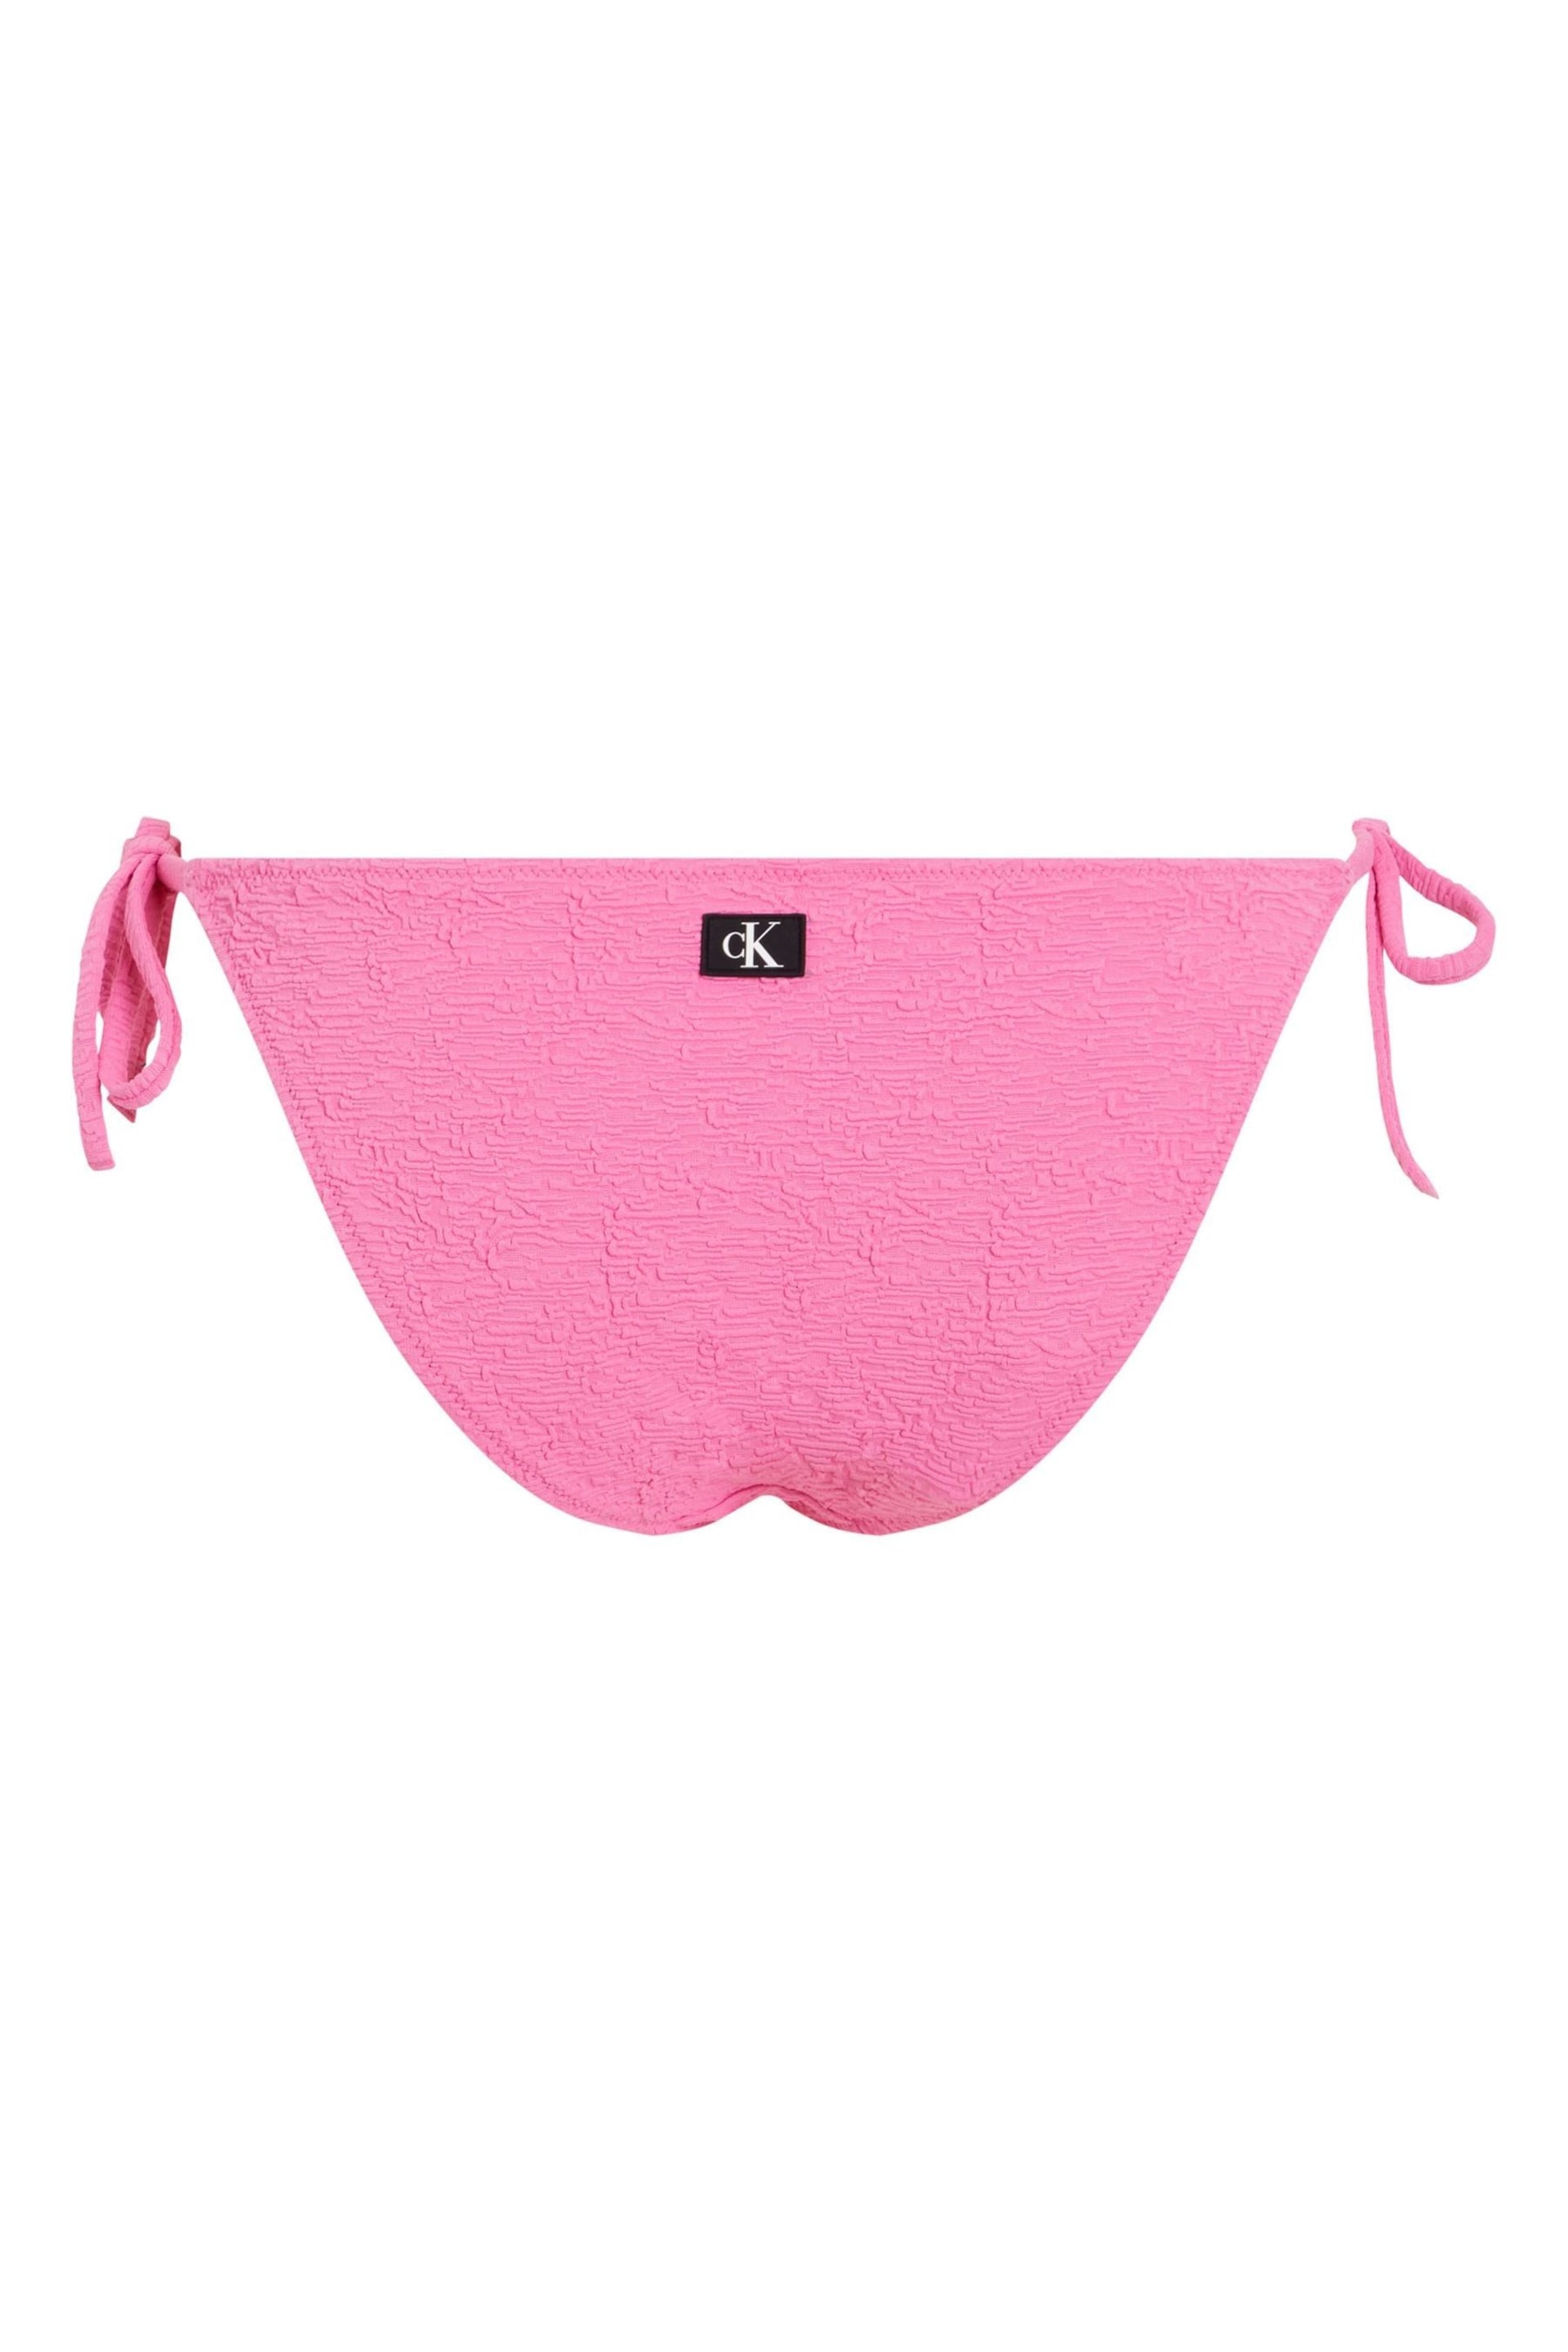 Calvin Klein Pink String Side Tie Bikini - Image 5 of 5